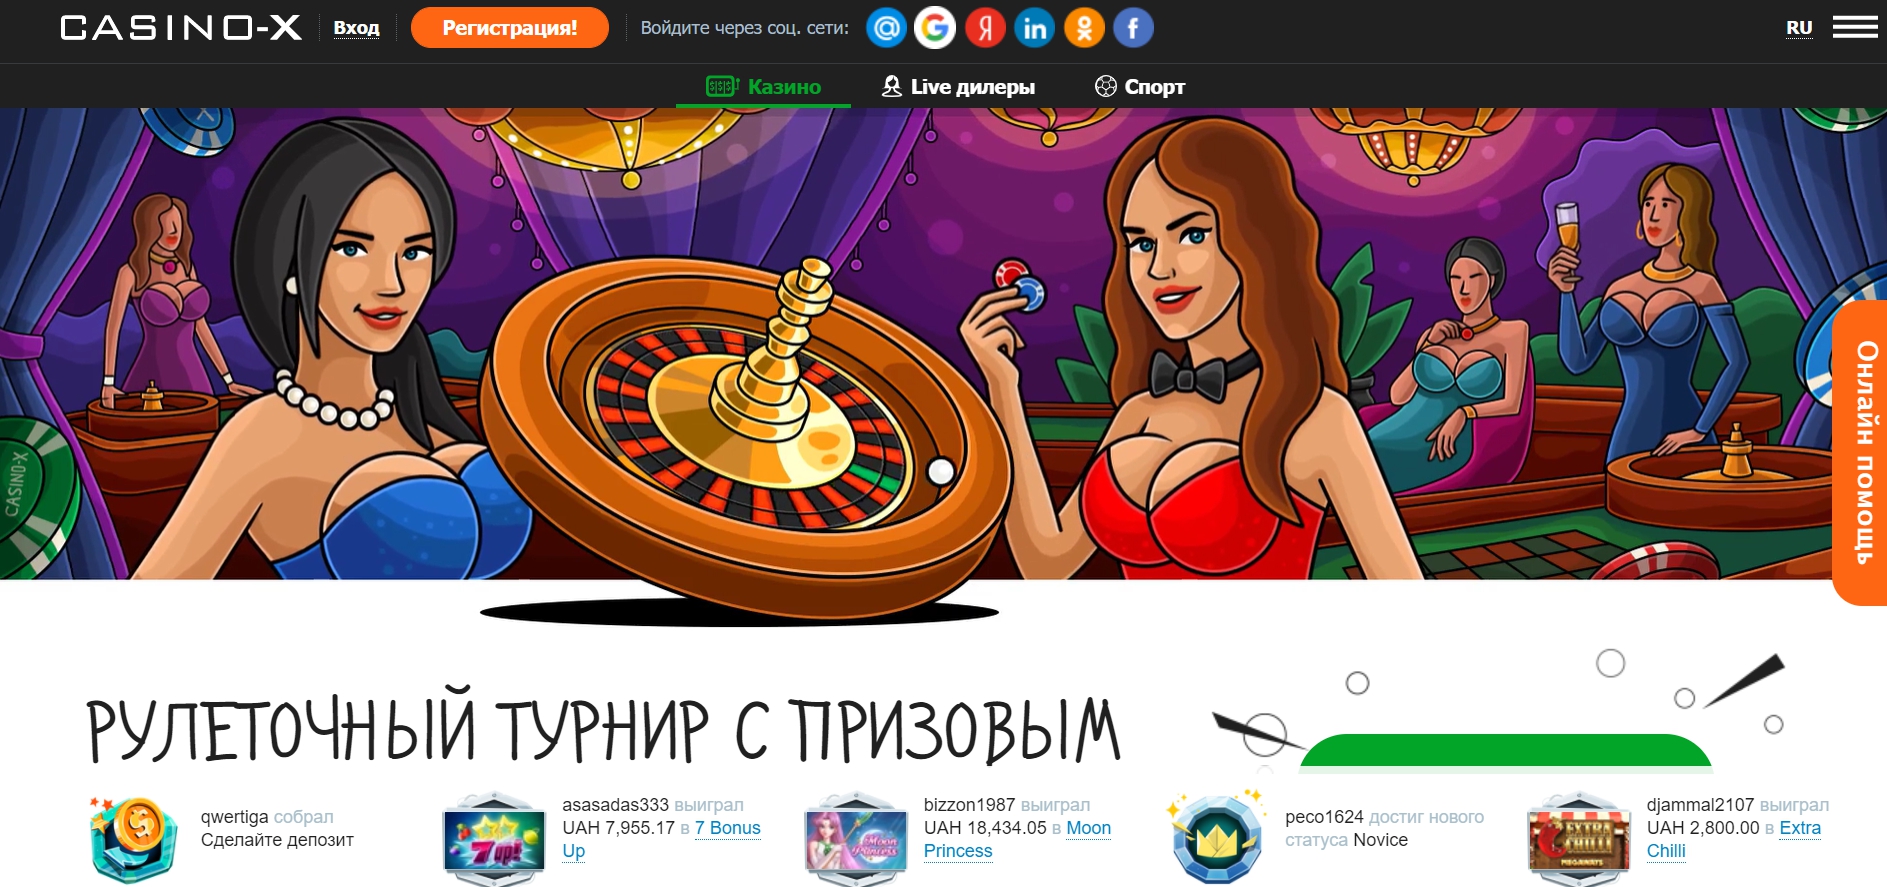 casino x com зеркало сайта online bet casino ru